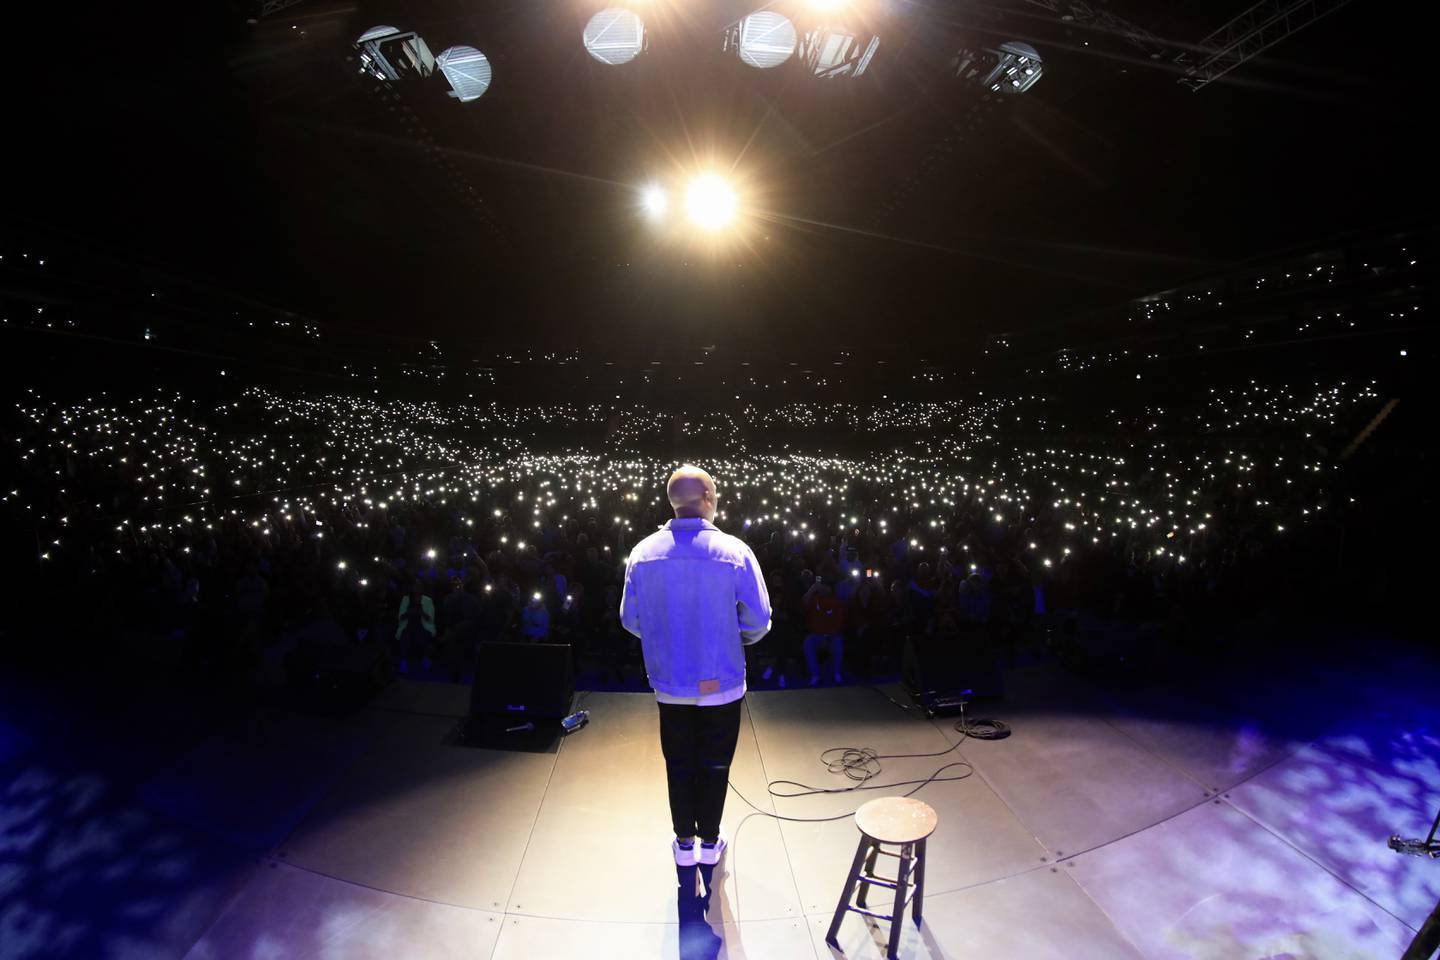 Jo Koy performed at the Coca-Cola Arena in 2020. Photo: Coca-Cola Arena